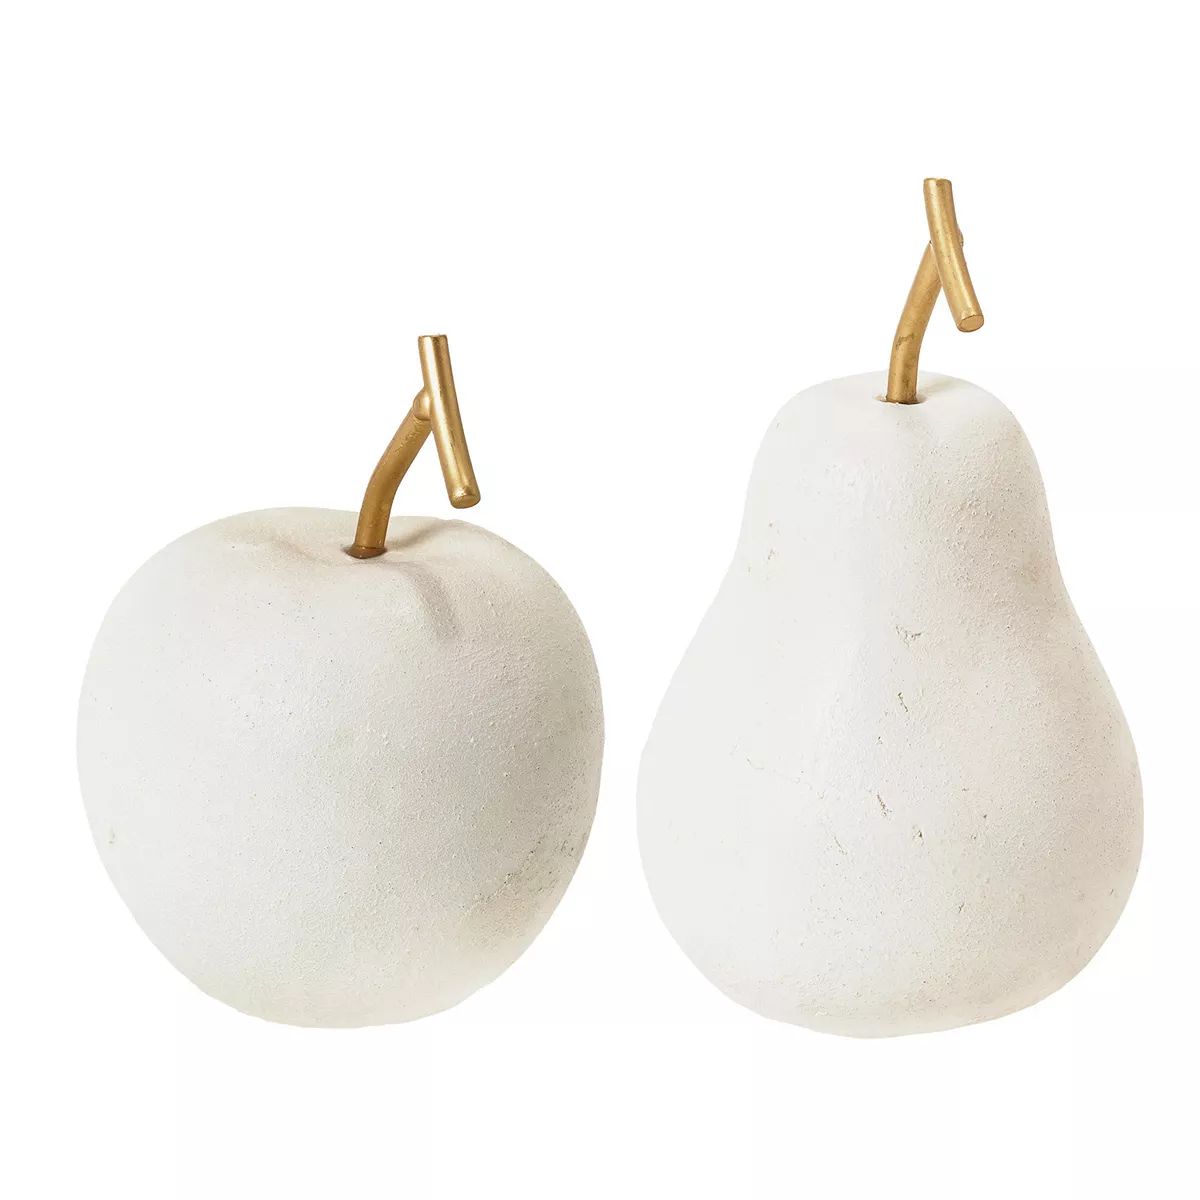 American Art Decor Cream Resin Apple & Pear Fruit Table Decor, 2-Piece Set | Kohl's